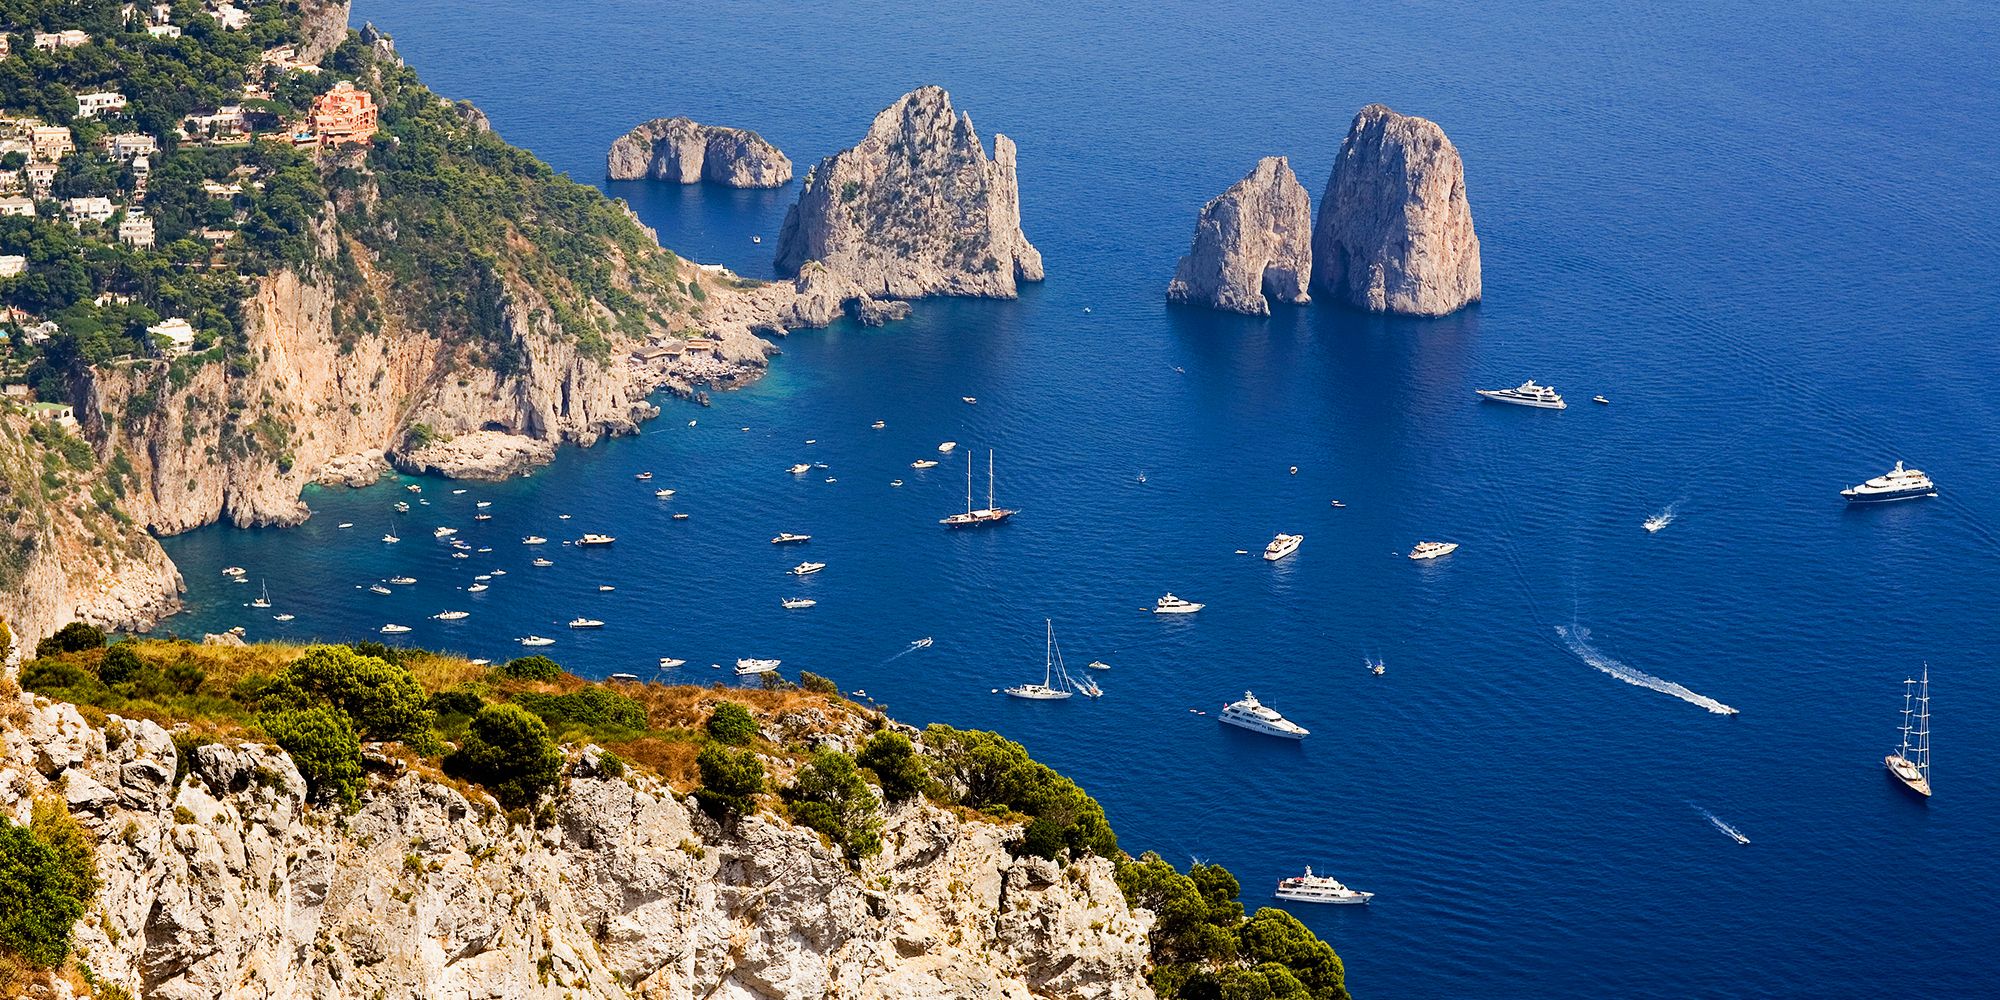 Capri - Most Beautiful Mediterranean Islands in Italy